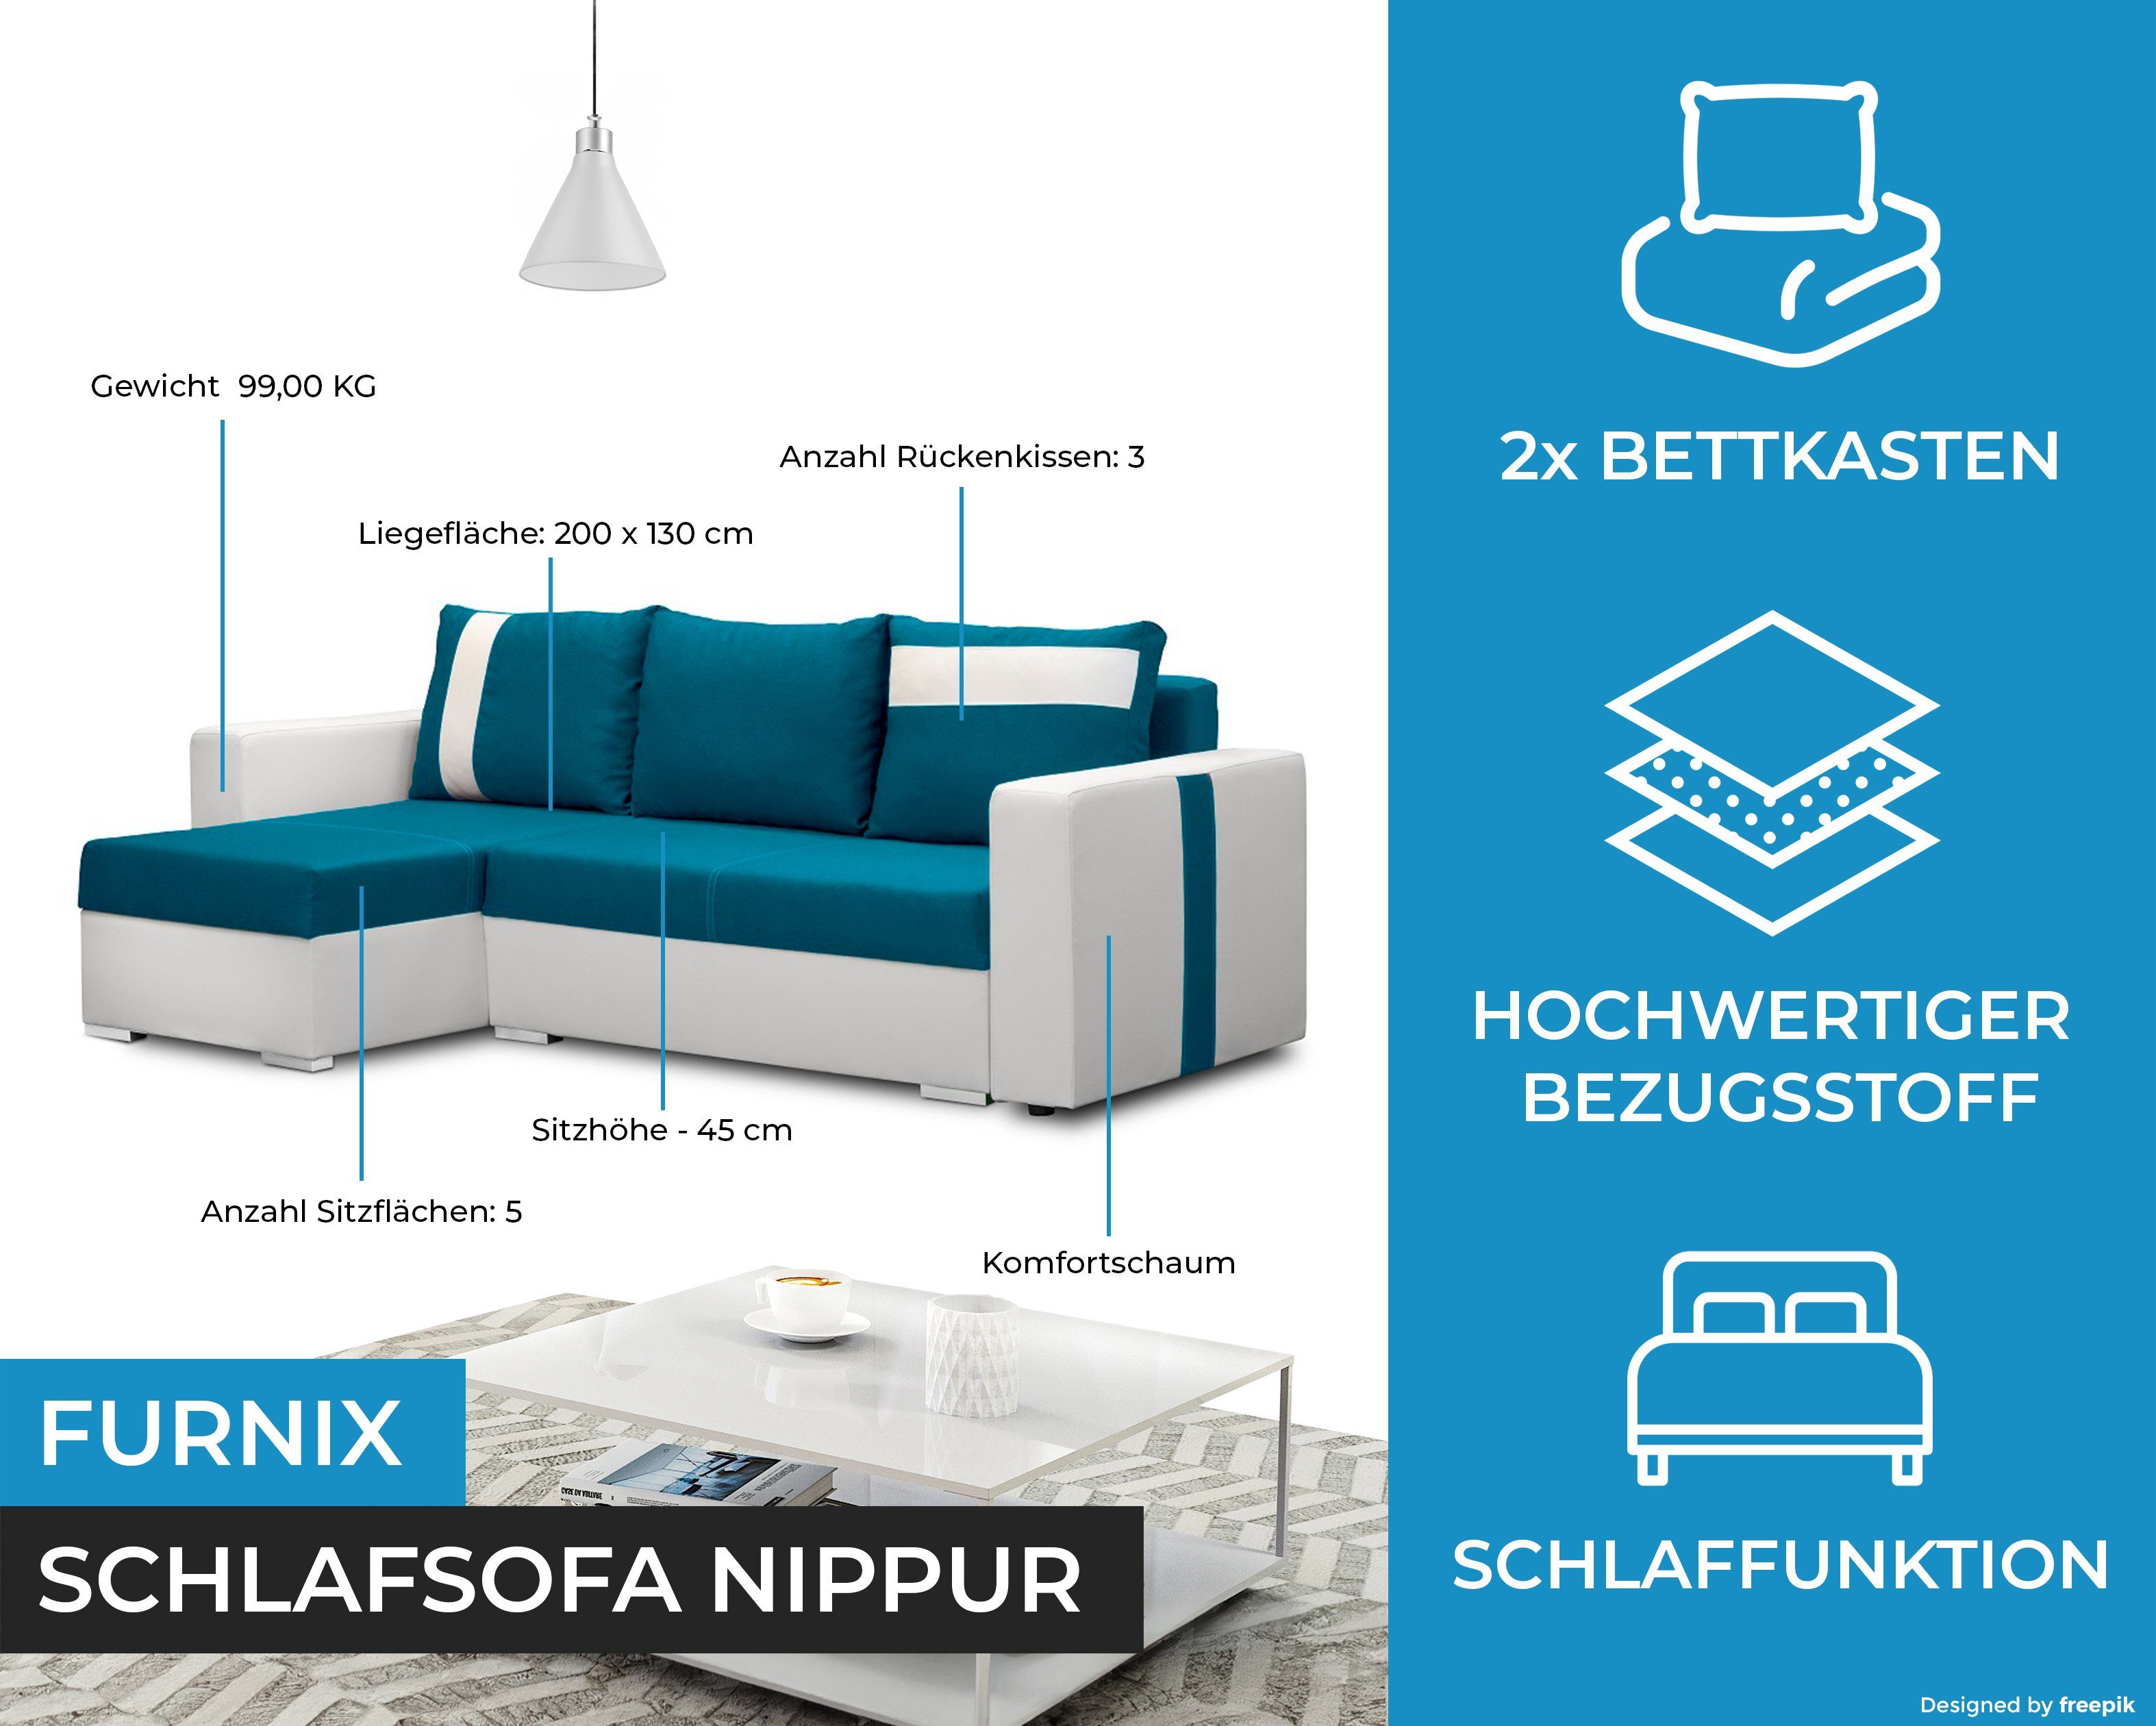 DL-Ausziehautomatik, NIPPUR Sitzhöhe: cm x BH16+SF17 in 45 Schlaffunktion, Sofa L-Form Polstercouch B230 Schlafsofa mit x Furnix 2x H90 T145 cm, Maße: Weiß/Blau Bettkasten,